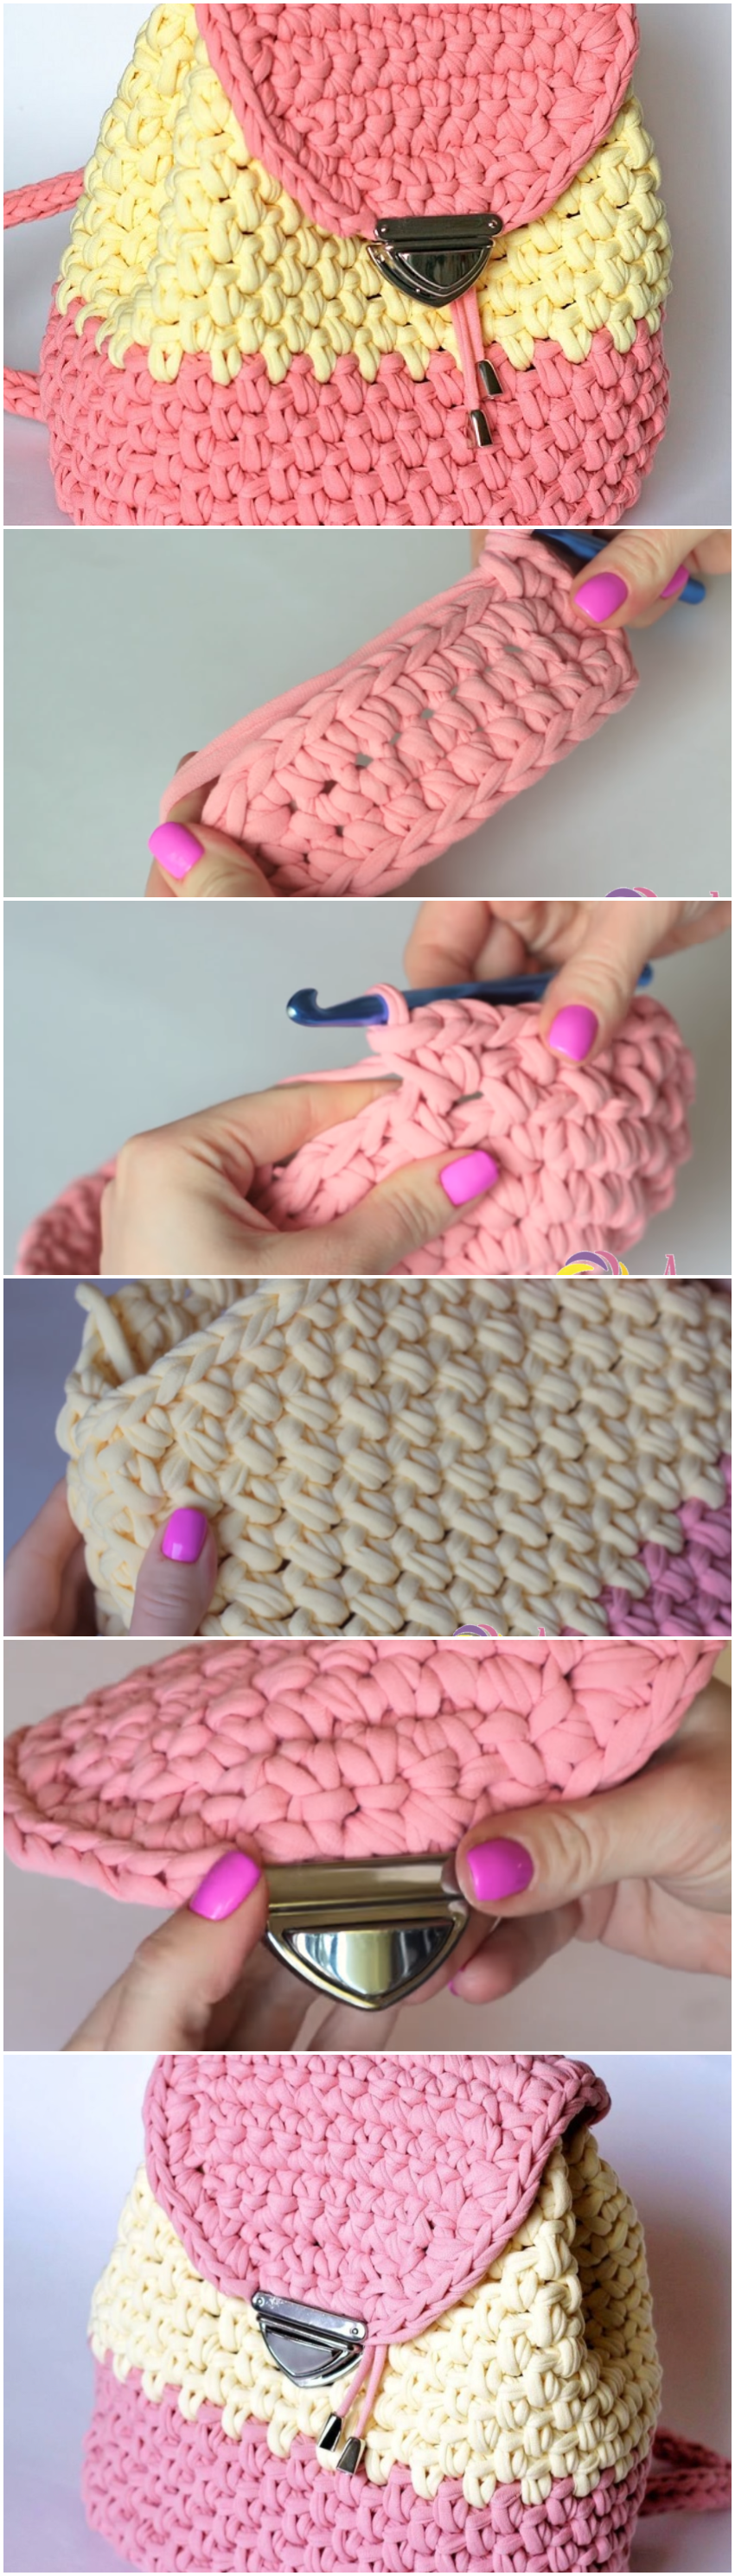 Crochet Backpack Tutorial